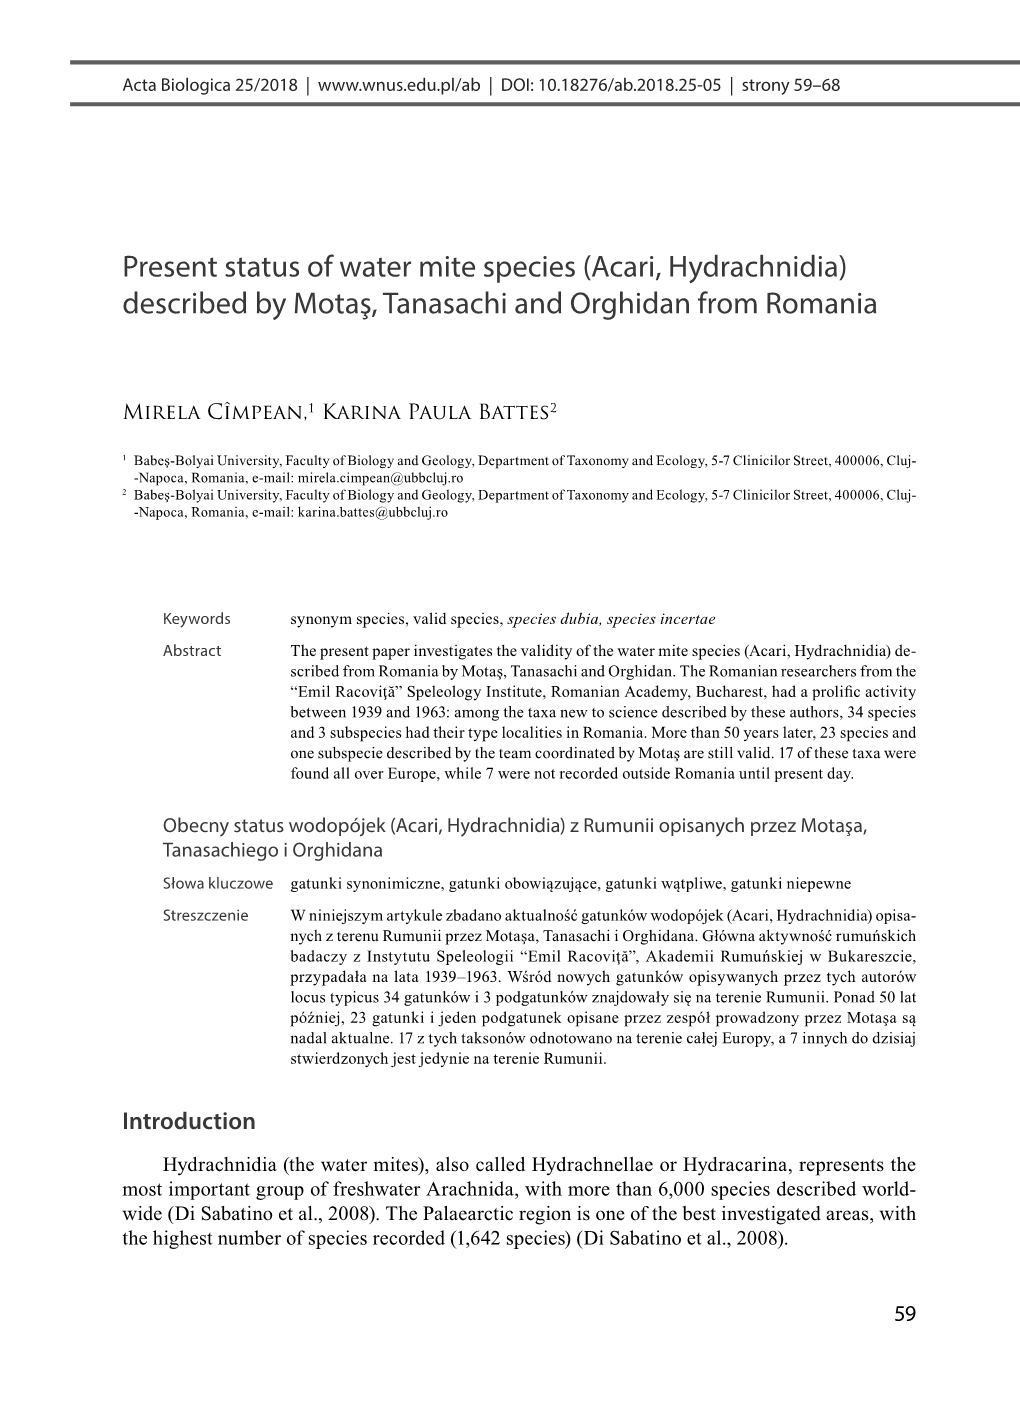 Present Status of Water Mite Species (Acari, Hydrachnidia) Described by Motaş, Tanasachi and Orghidan from Romania